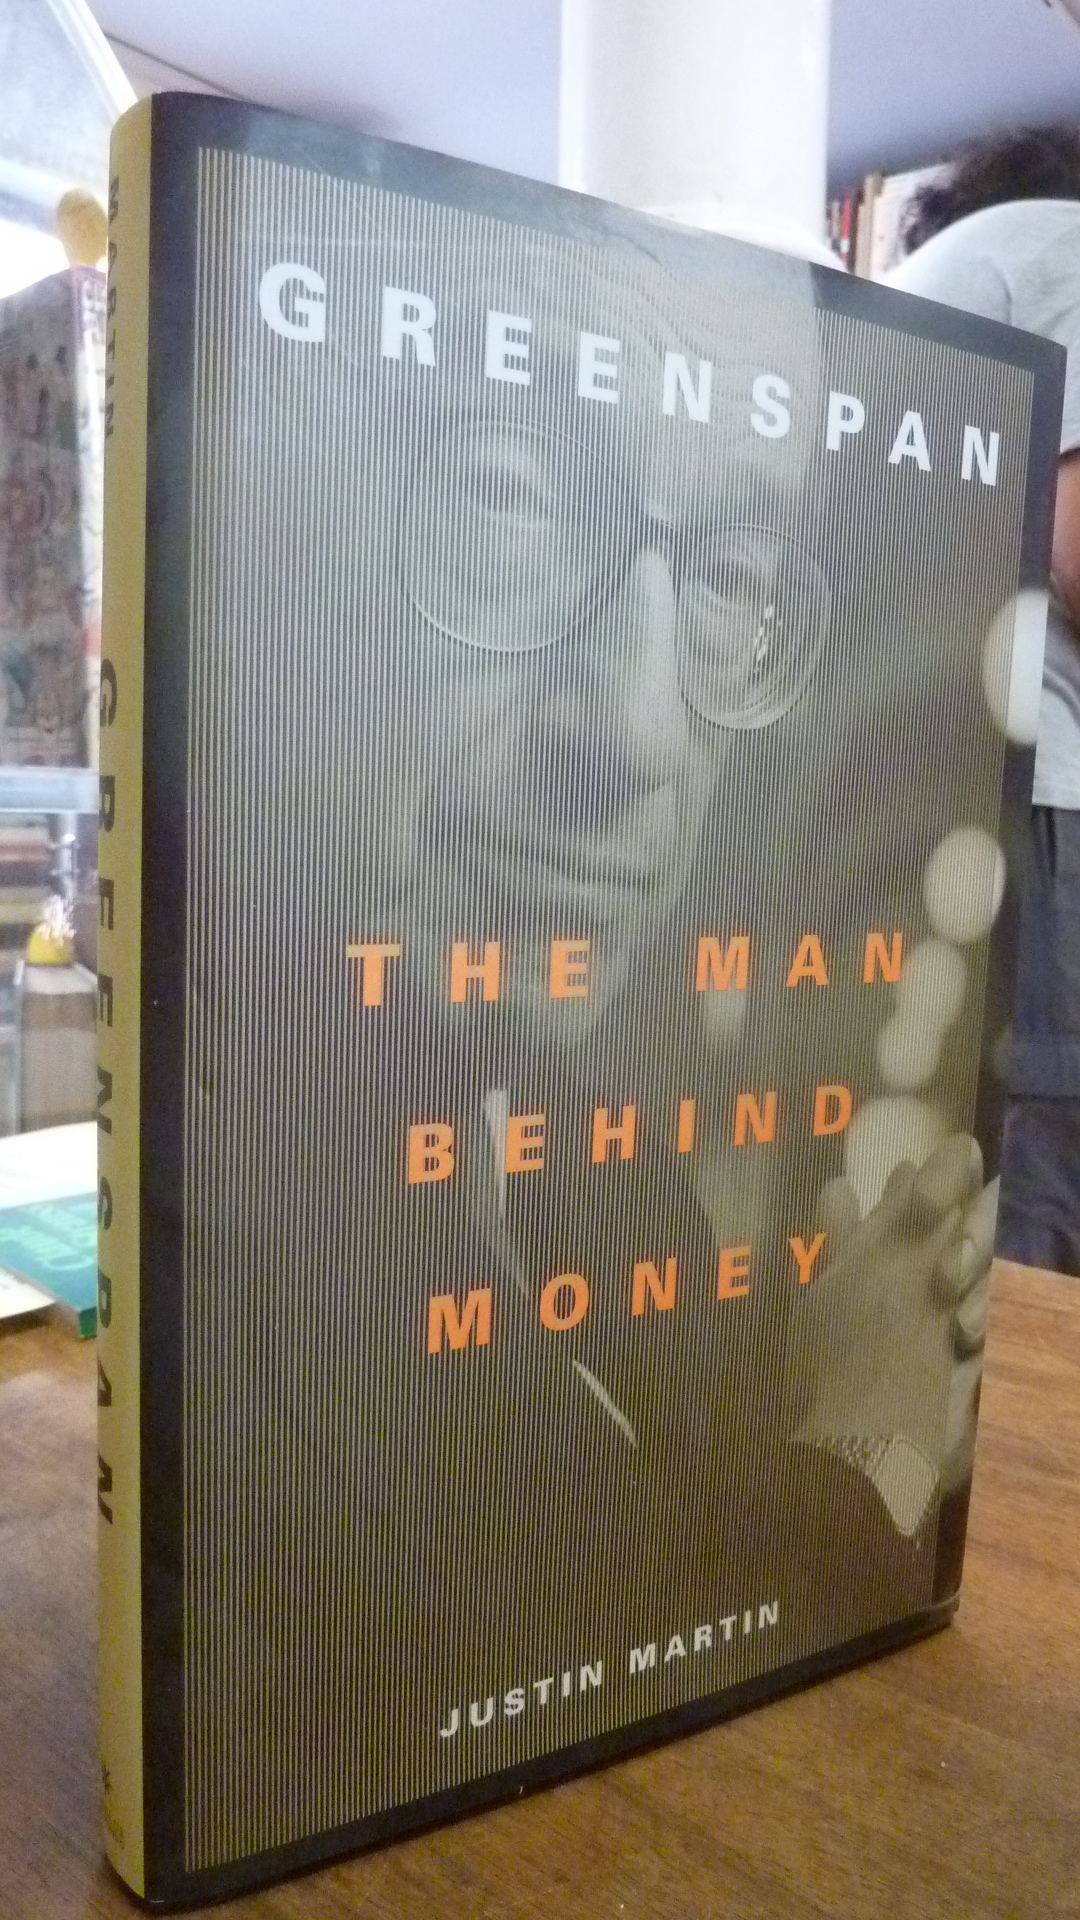 Martin, Greenspan – The Man Behind Money (signiert/signed),